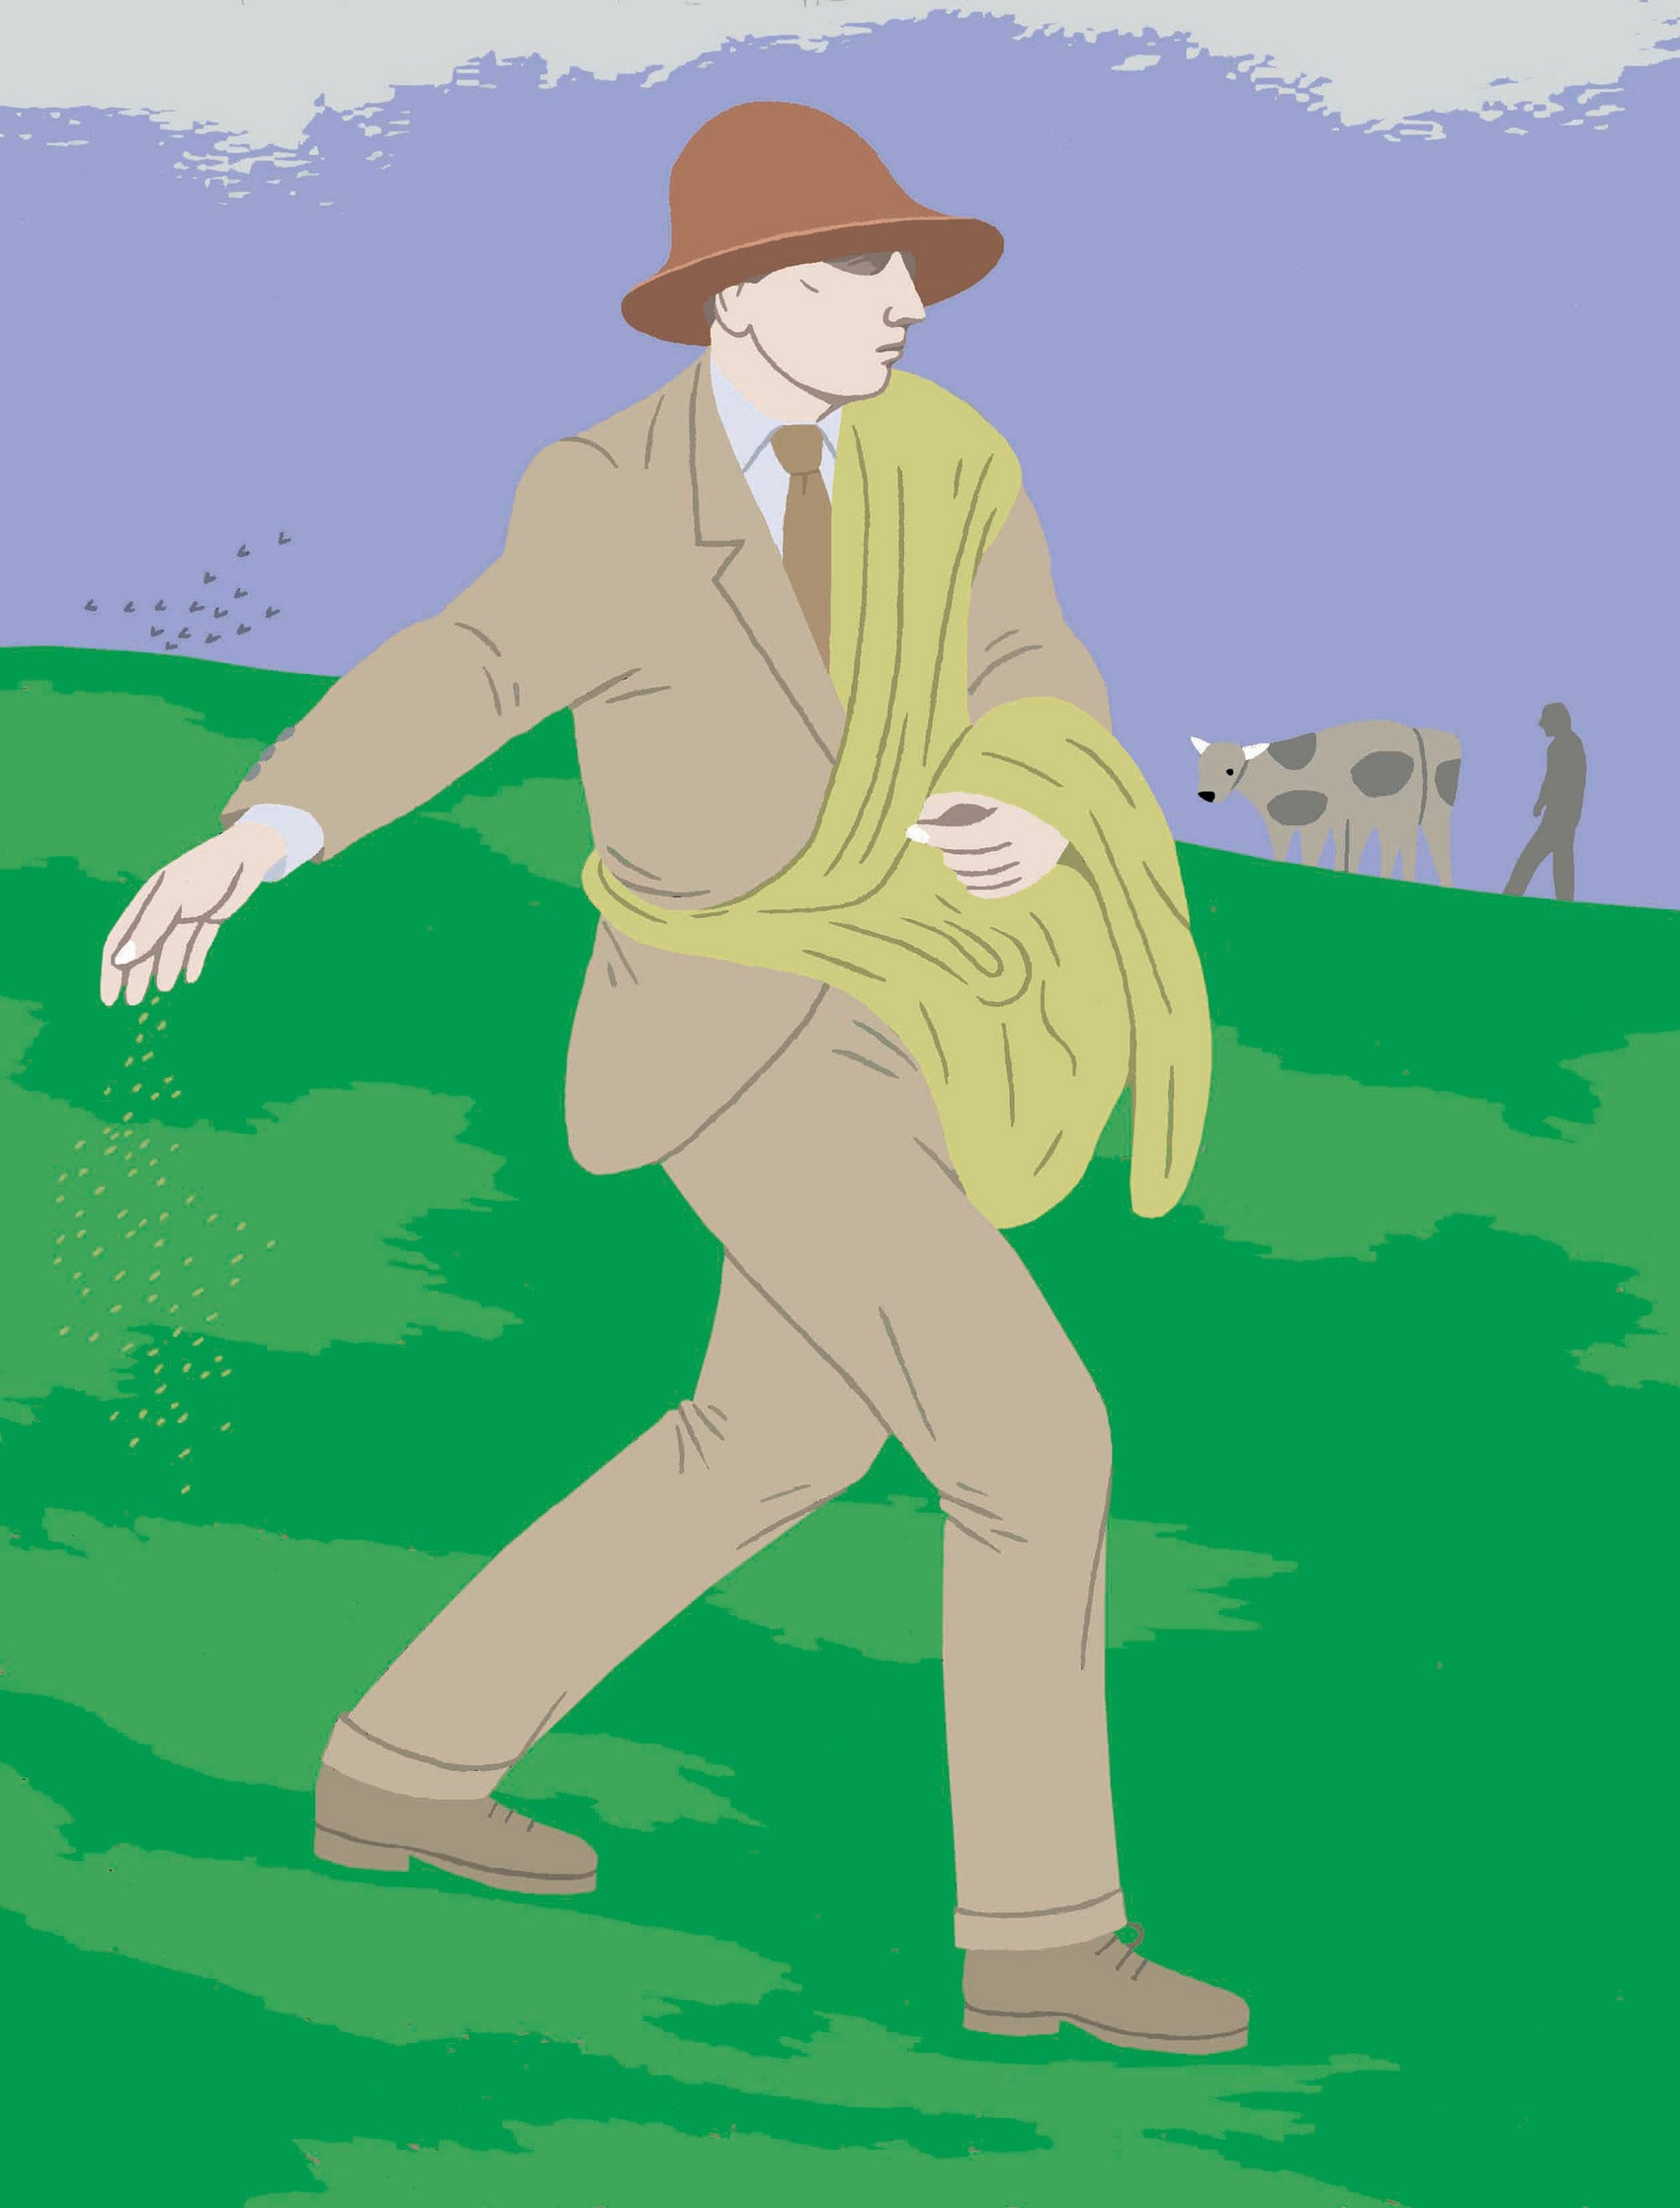 Illustration - Man walking on grass